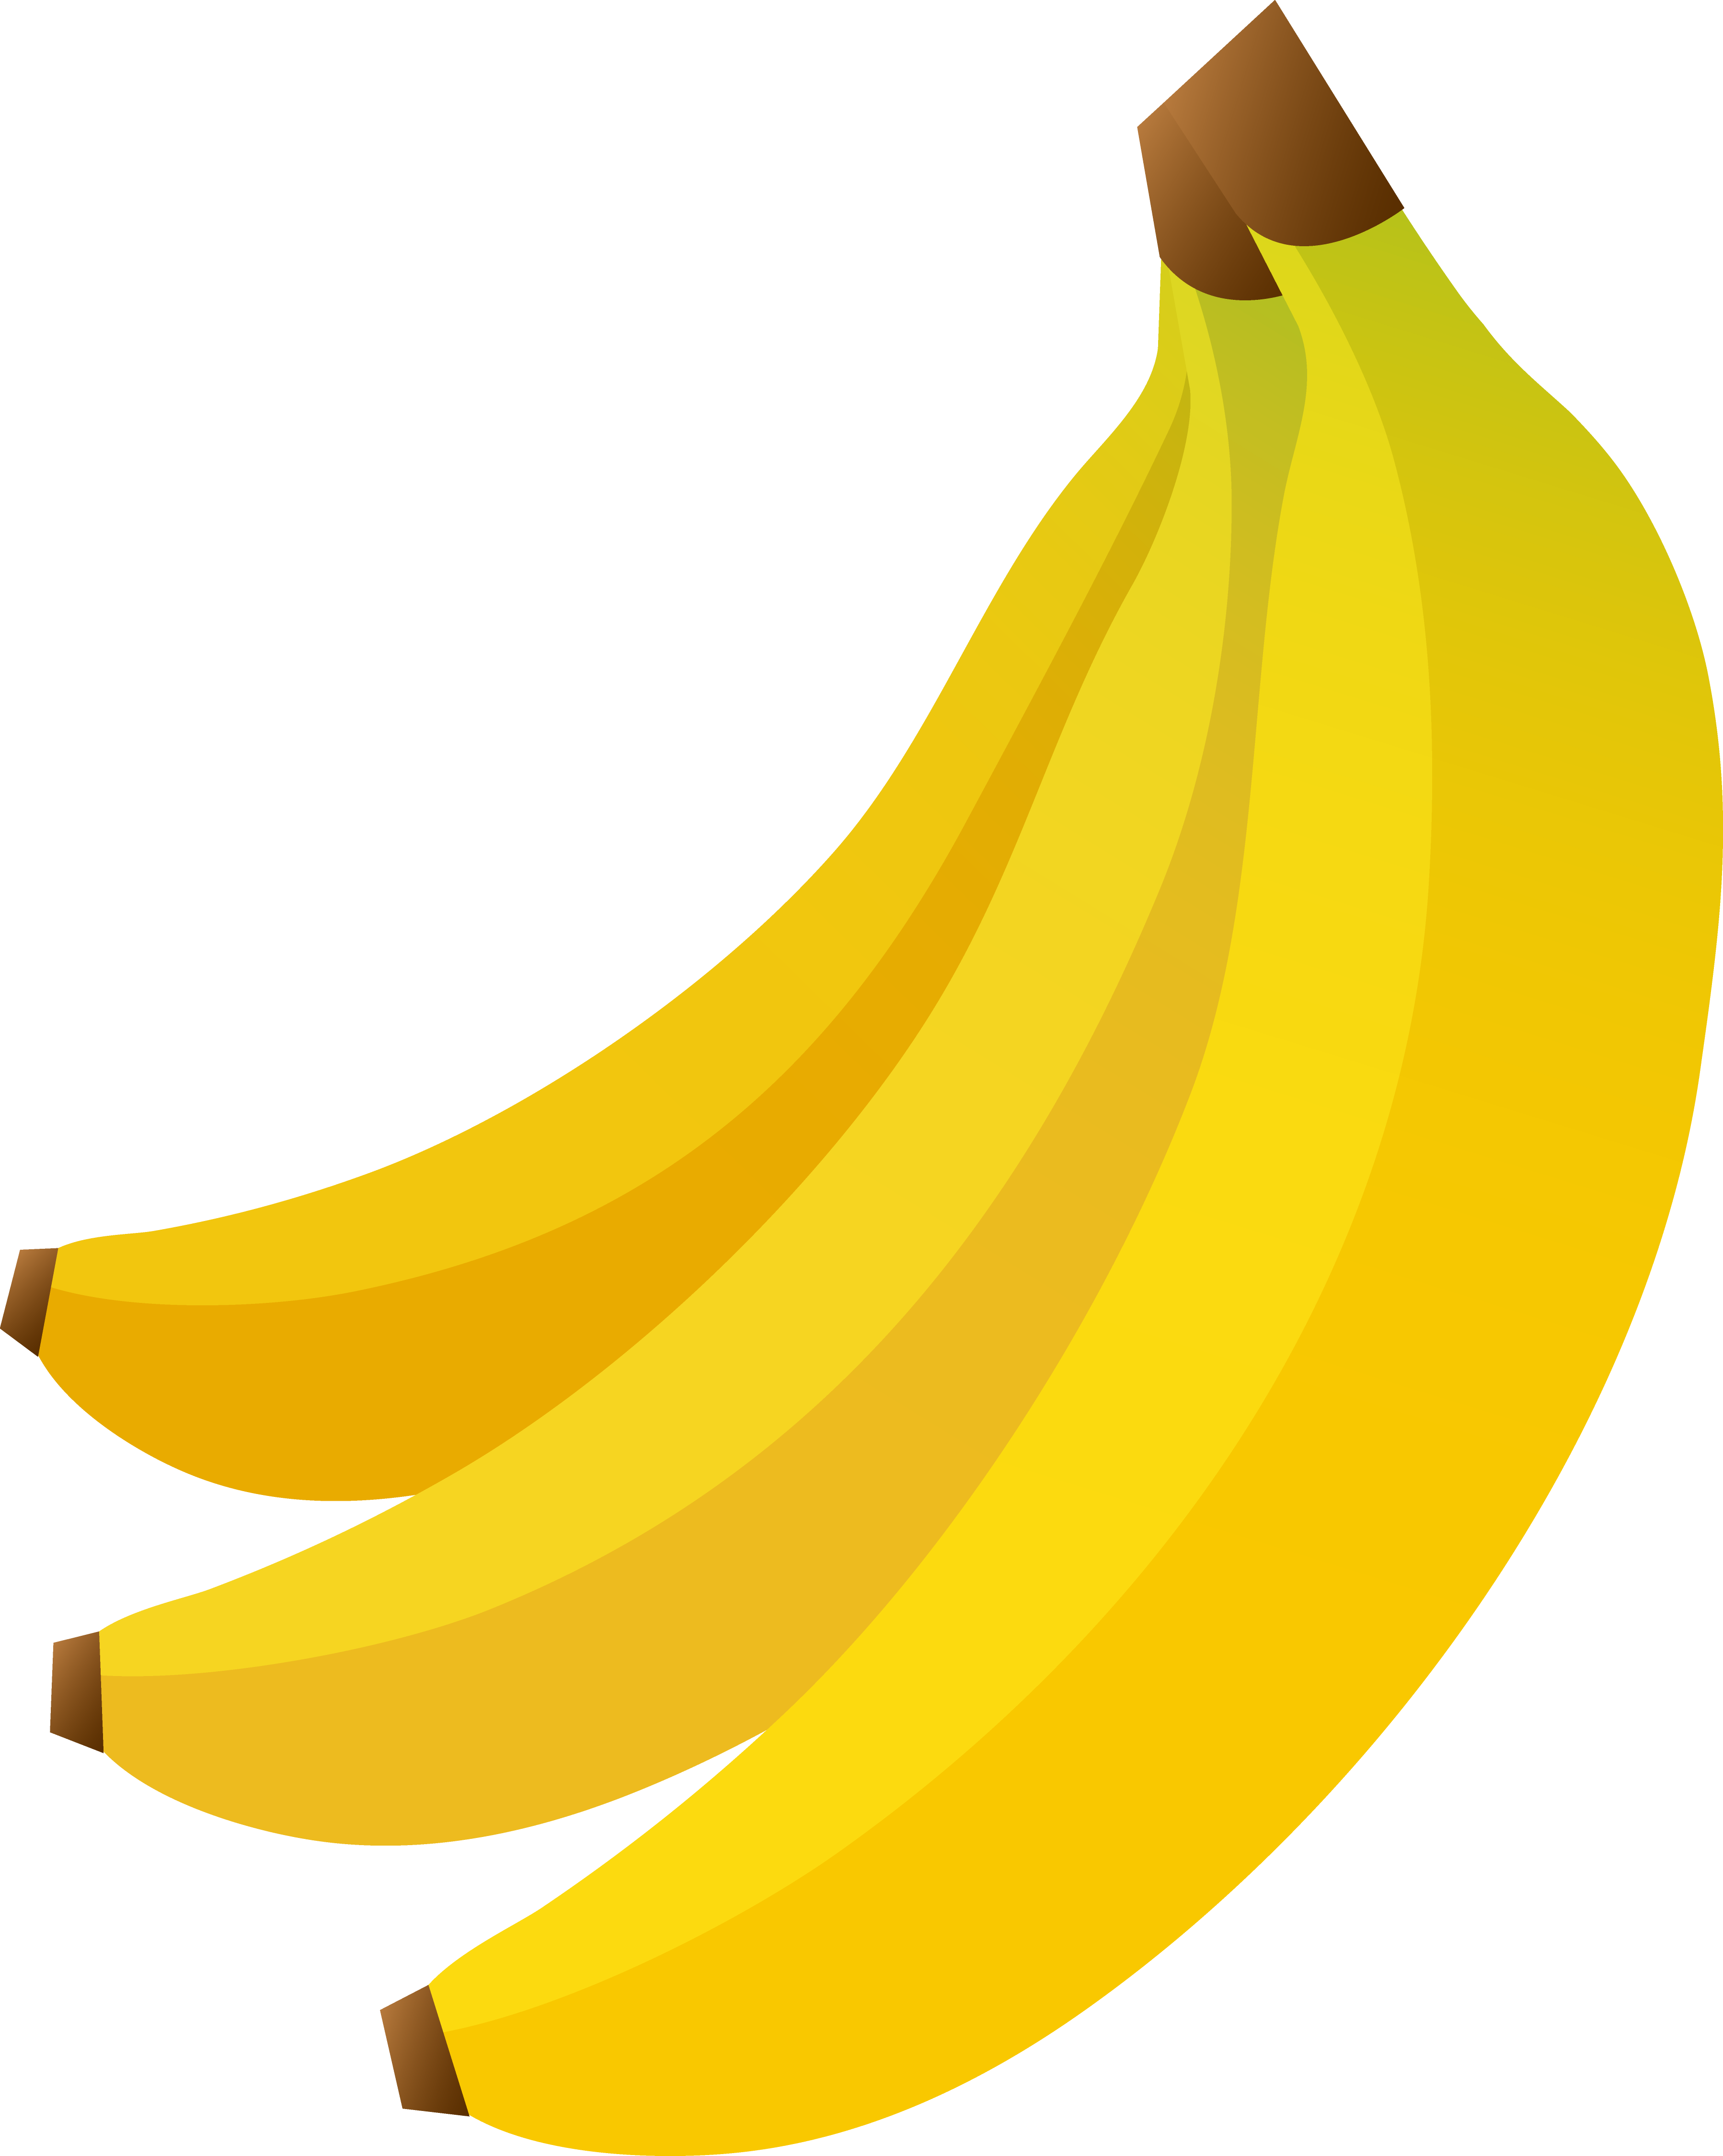 Yellow Bananas Clipart free image